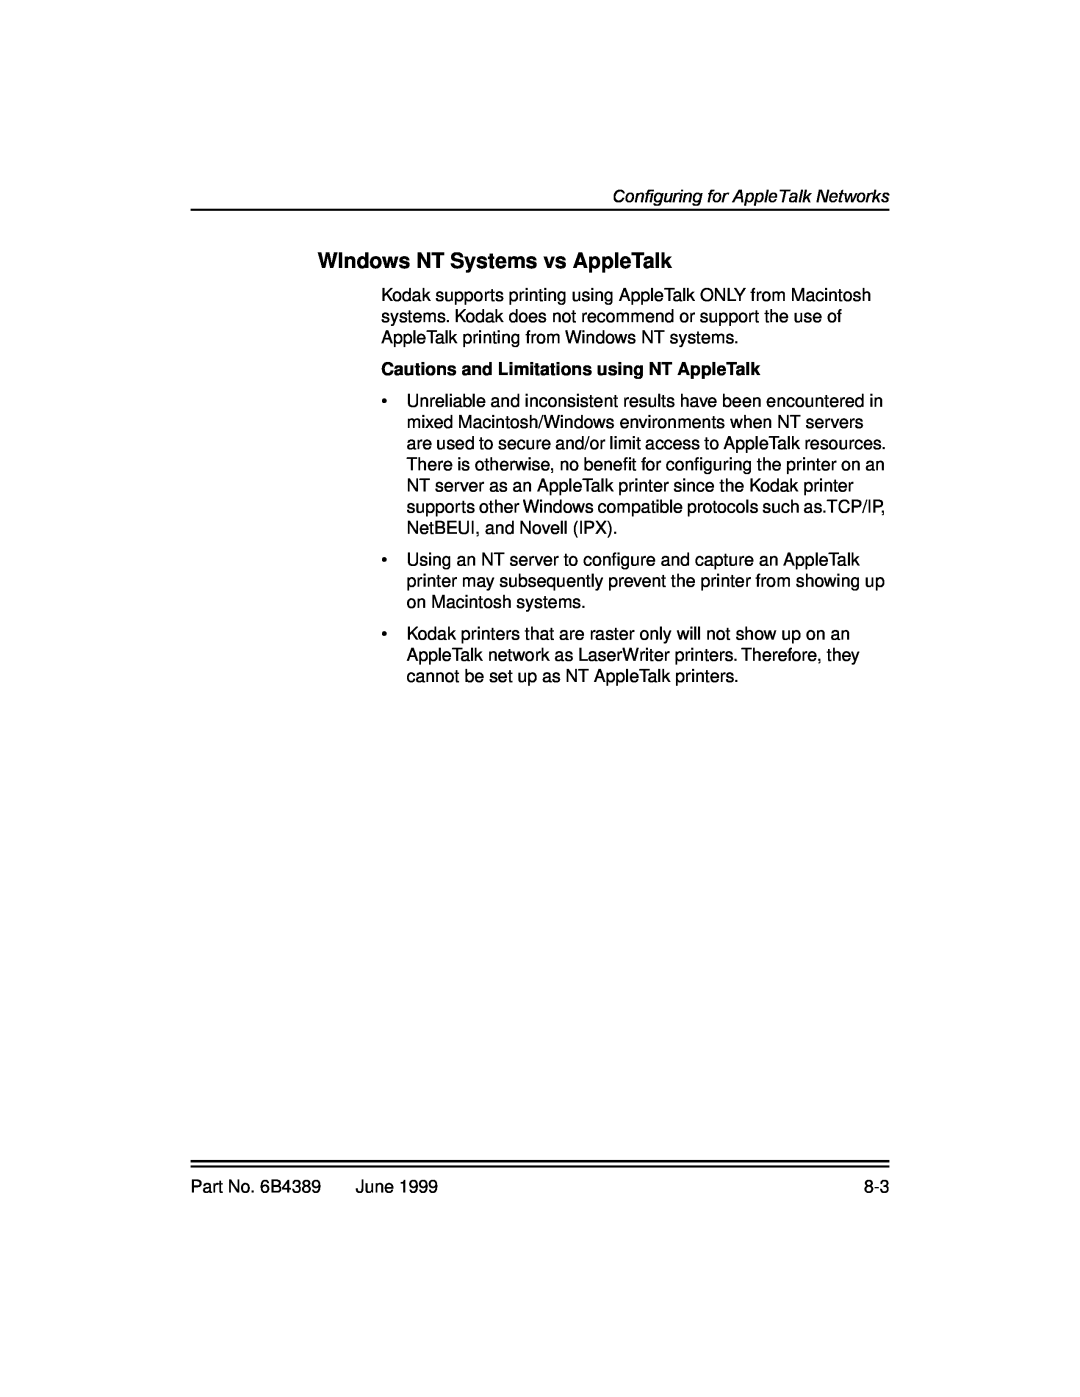 Kodak 8660, 8670 manual WIndows NT Systems vs AppleTalk, Cautions and Limitations using NT AppleTalk 